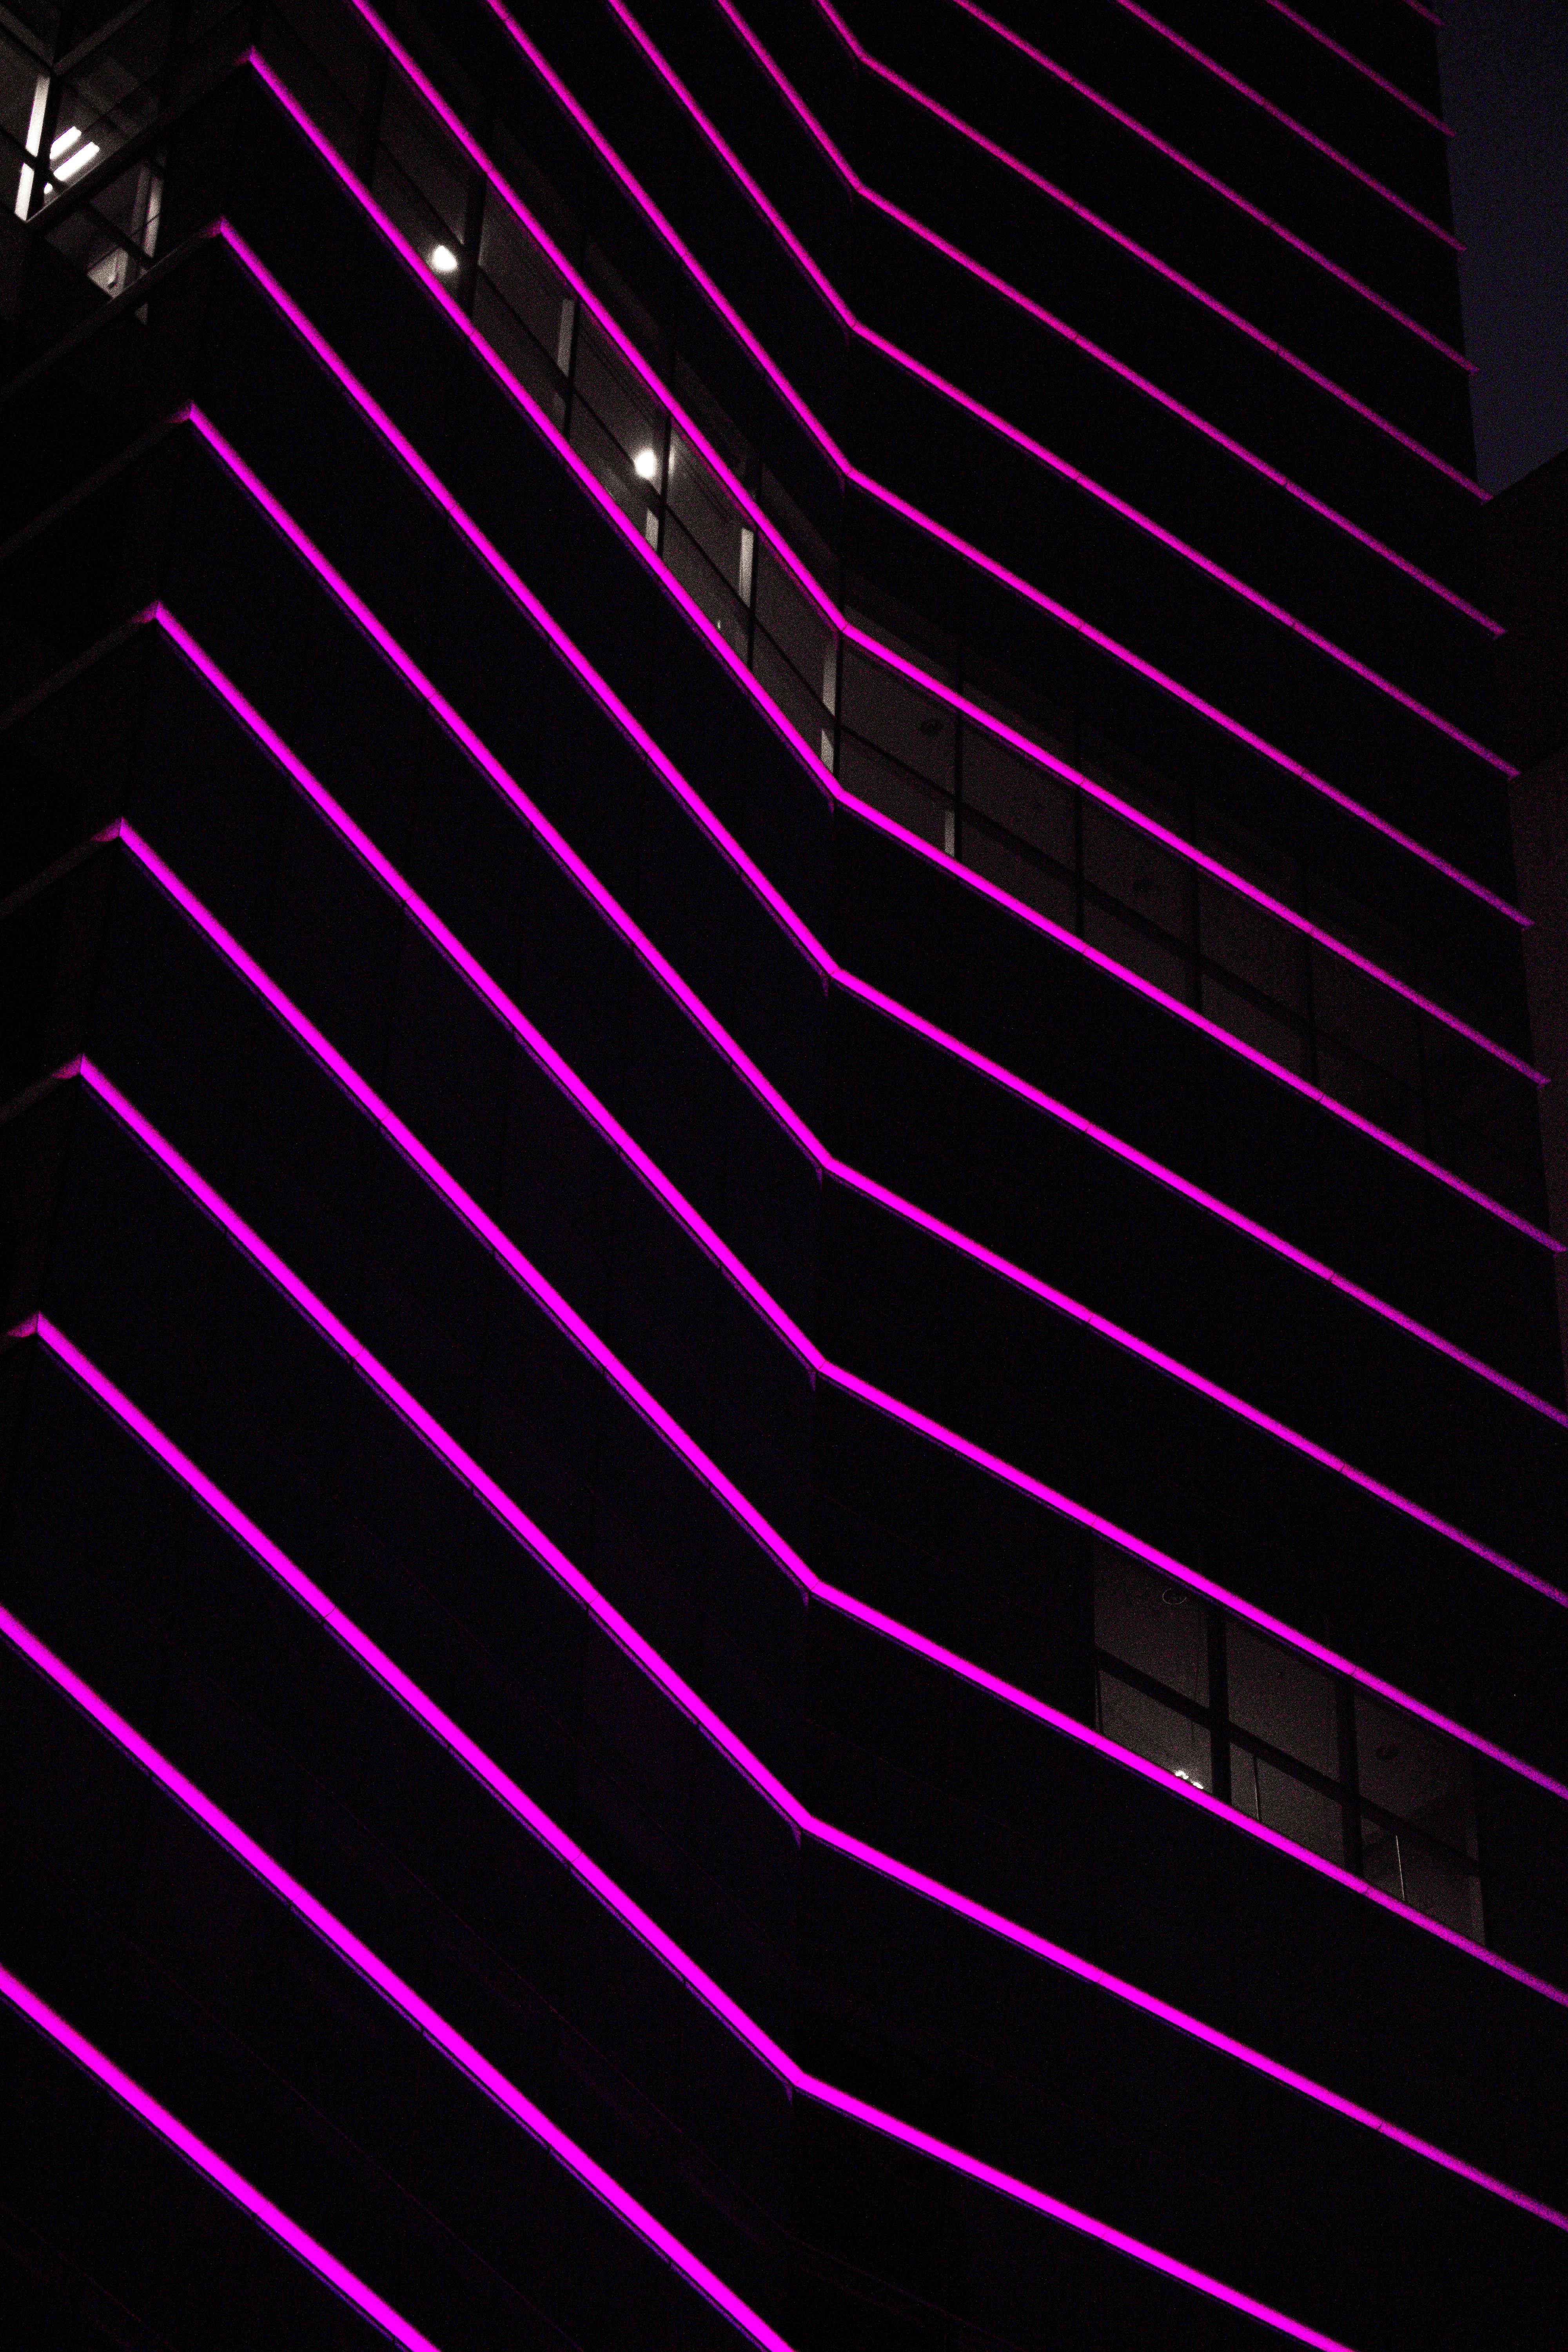 Free stock photo of building, building exterior, neon